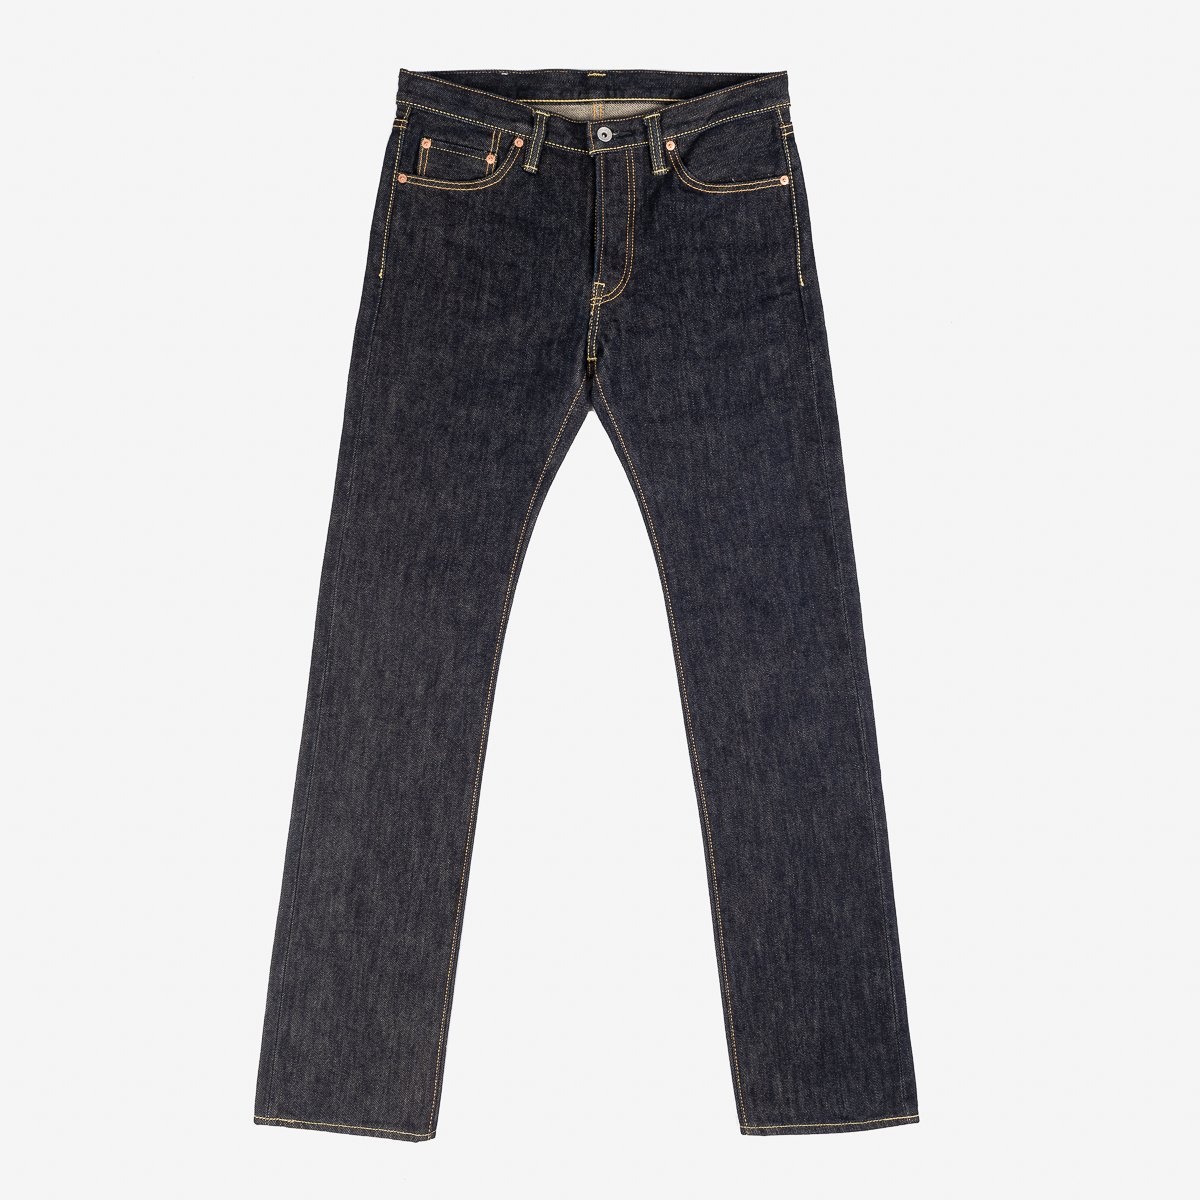 IH-666S-21 21oz Selvedge Denim Slim Straight Cut Jeans - Indigo - 1